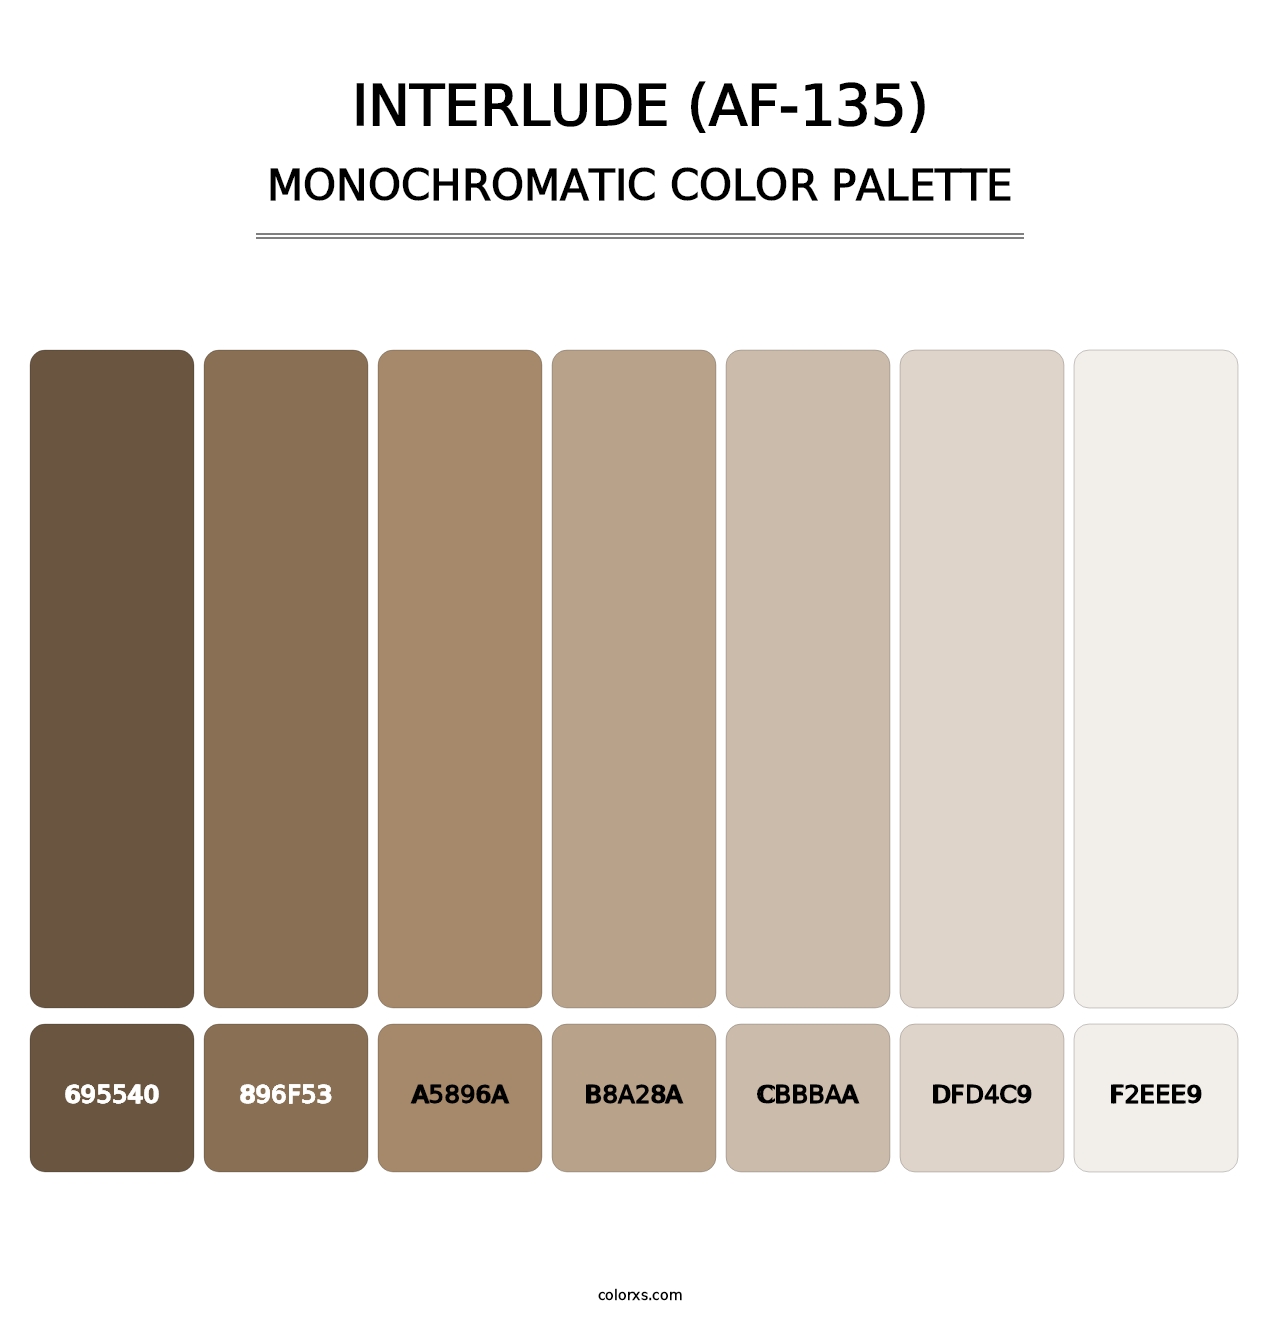 Interlude (AF-135) - Monochromatic Color Palette